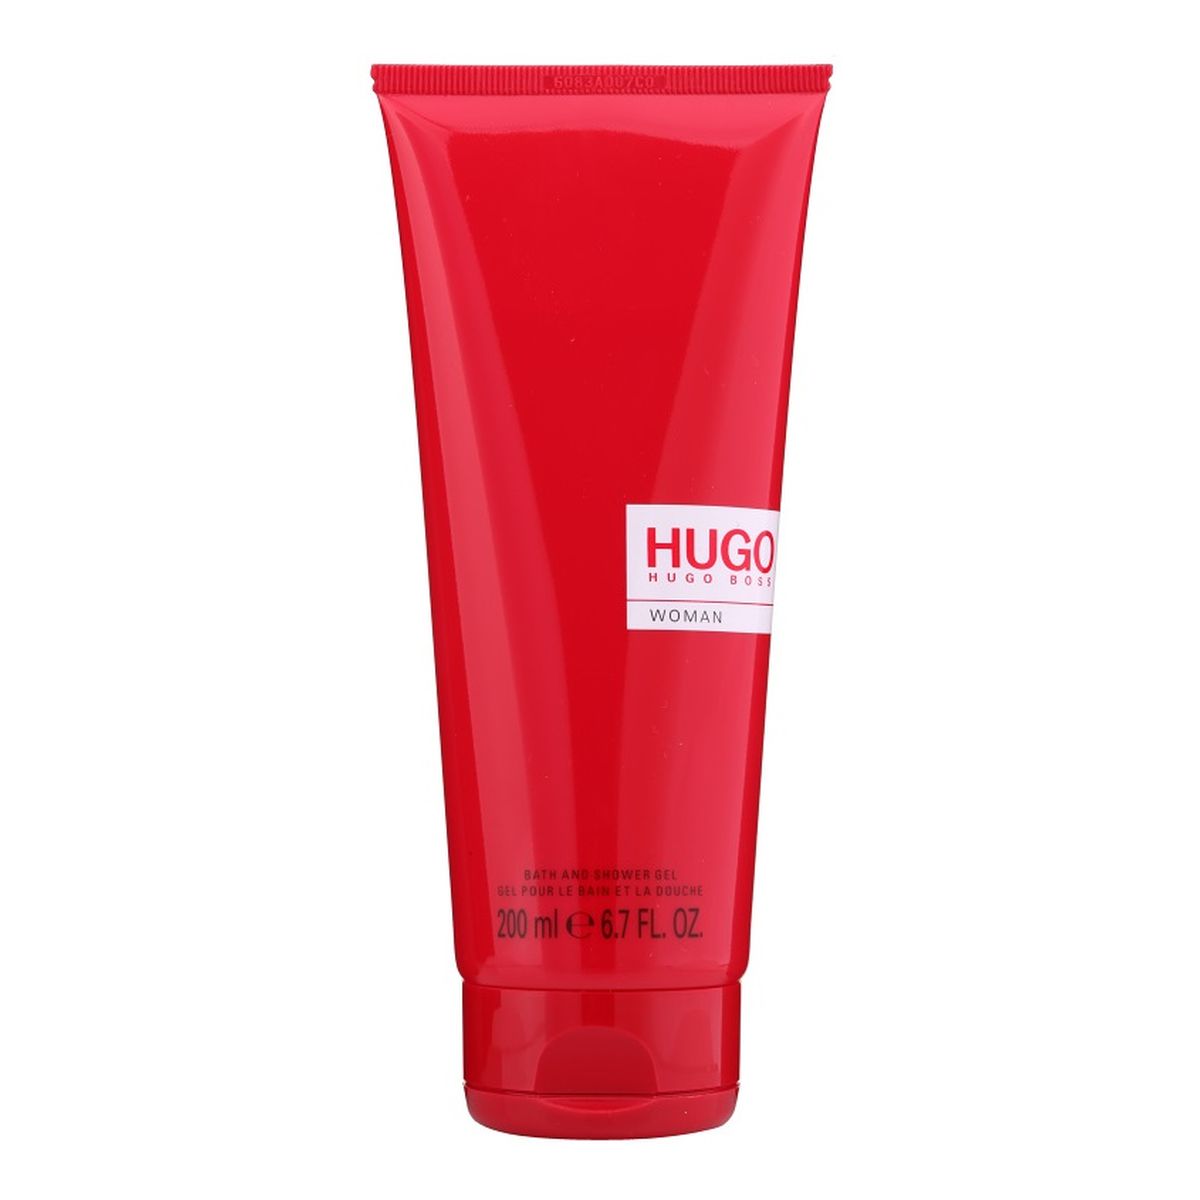 Hugo Boss Hugo Woman Żel pod prysznic 200ml